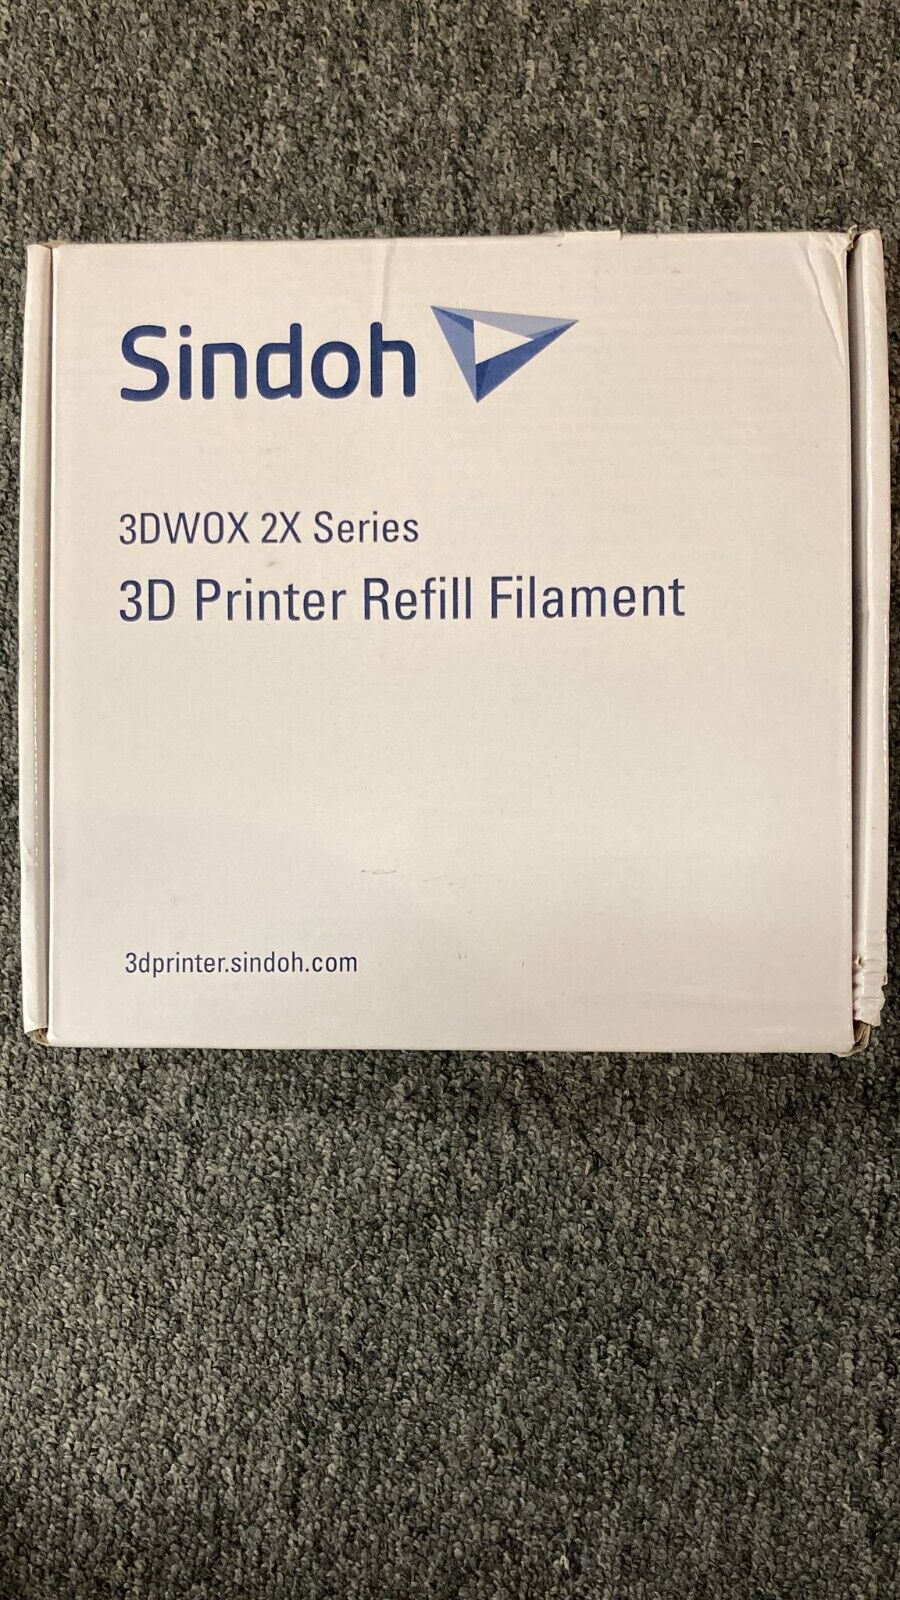 Sindoh 3DWOX 2X Series 3D Printer Refill Filament - FLEX, RED 1.75mm 500g